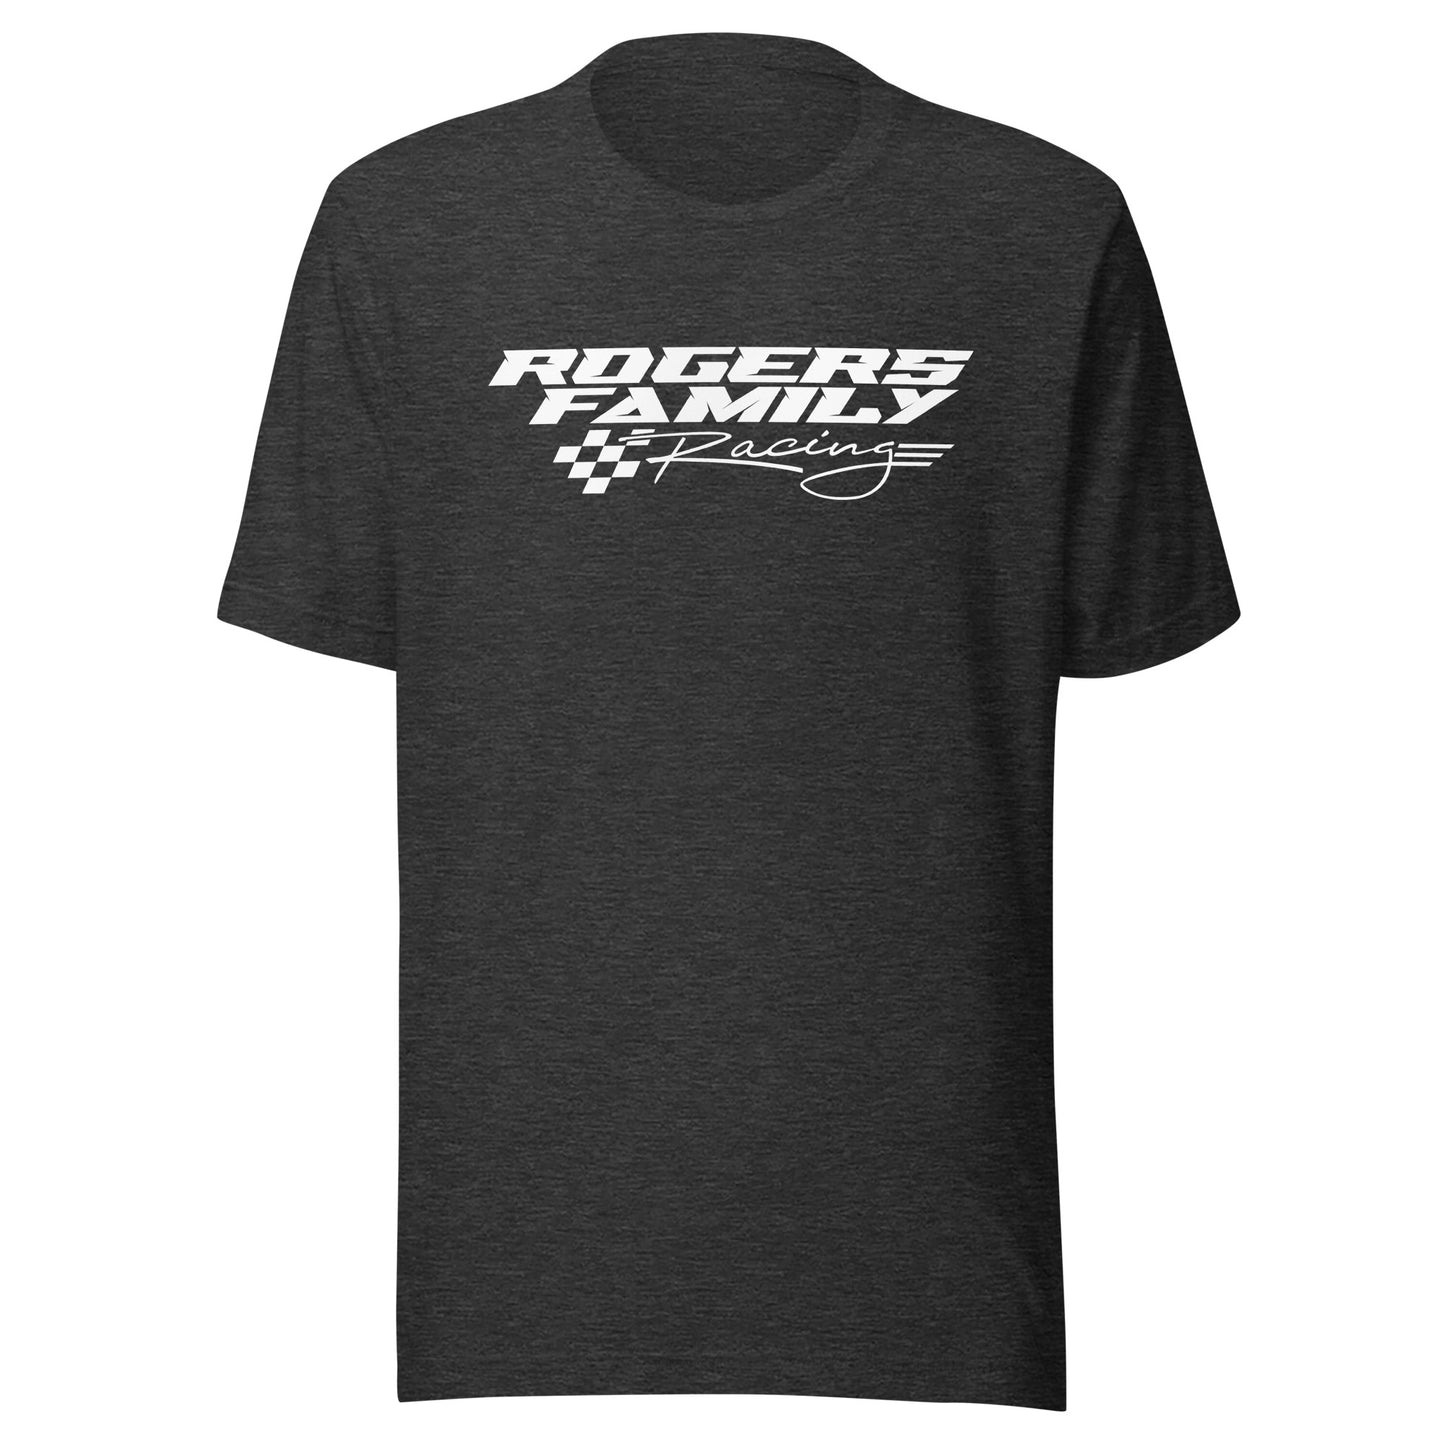 Rogers Family Racing T-Shirt